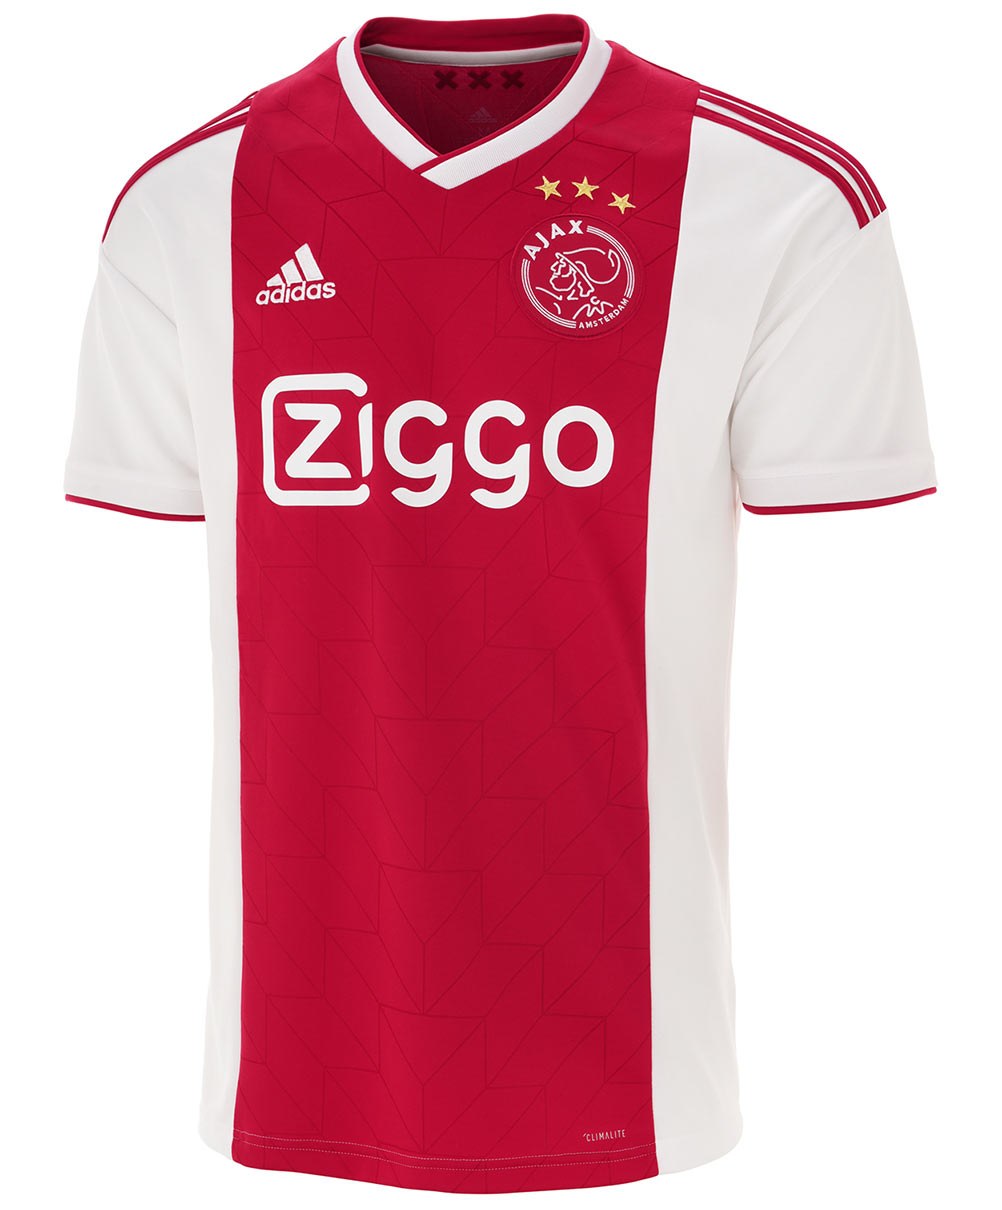 Maglie Ajax 2018-2019, design retrò e tocchi dorati per adidas